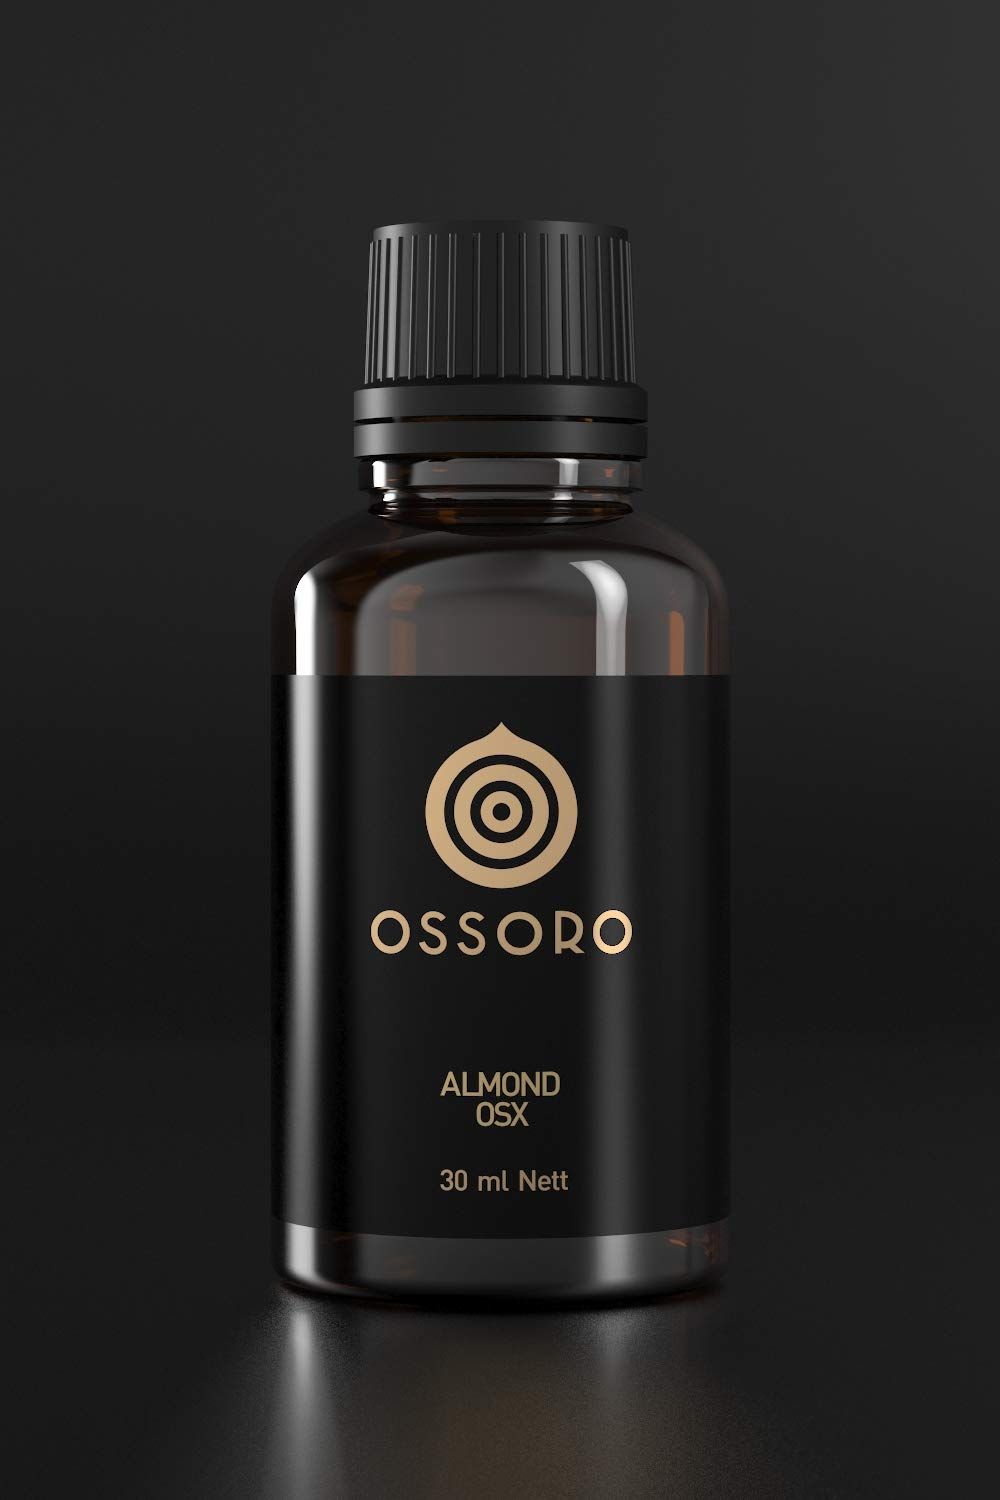 Ossoro Almond OXS Image